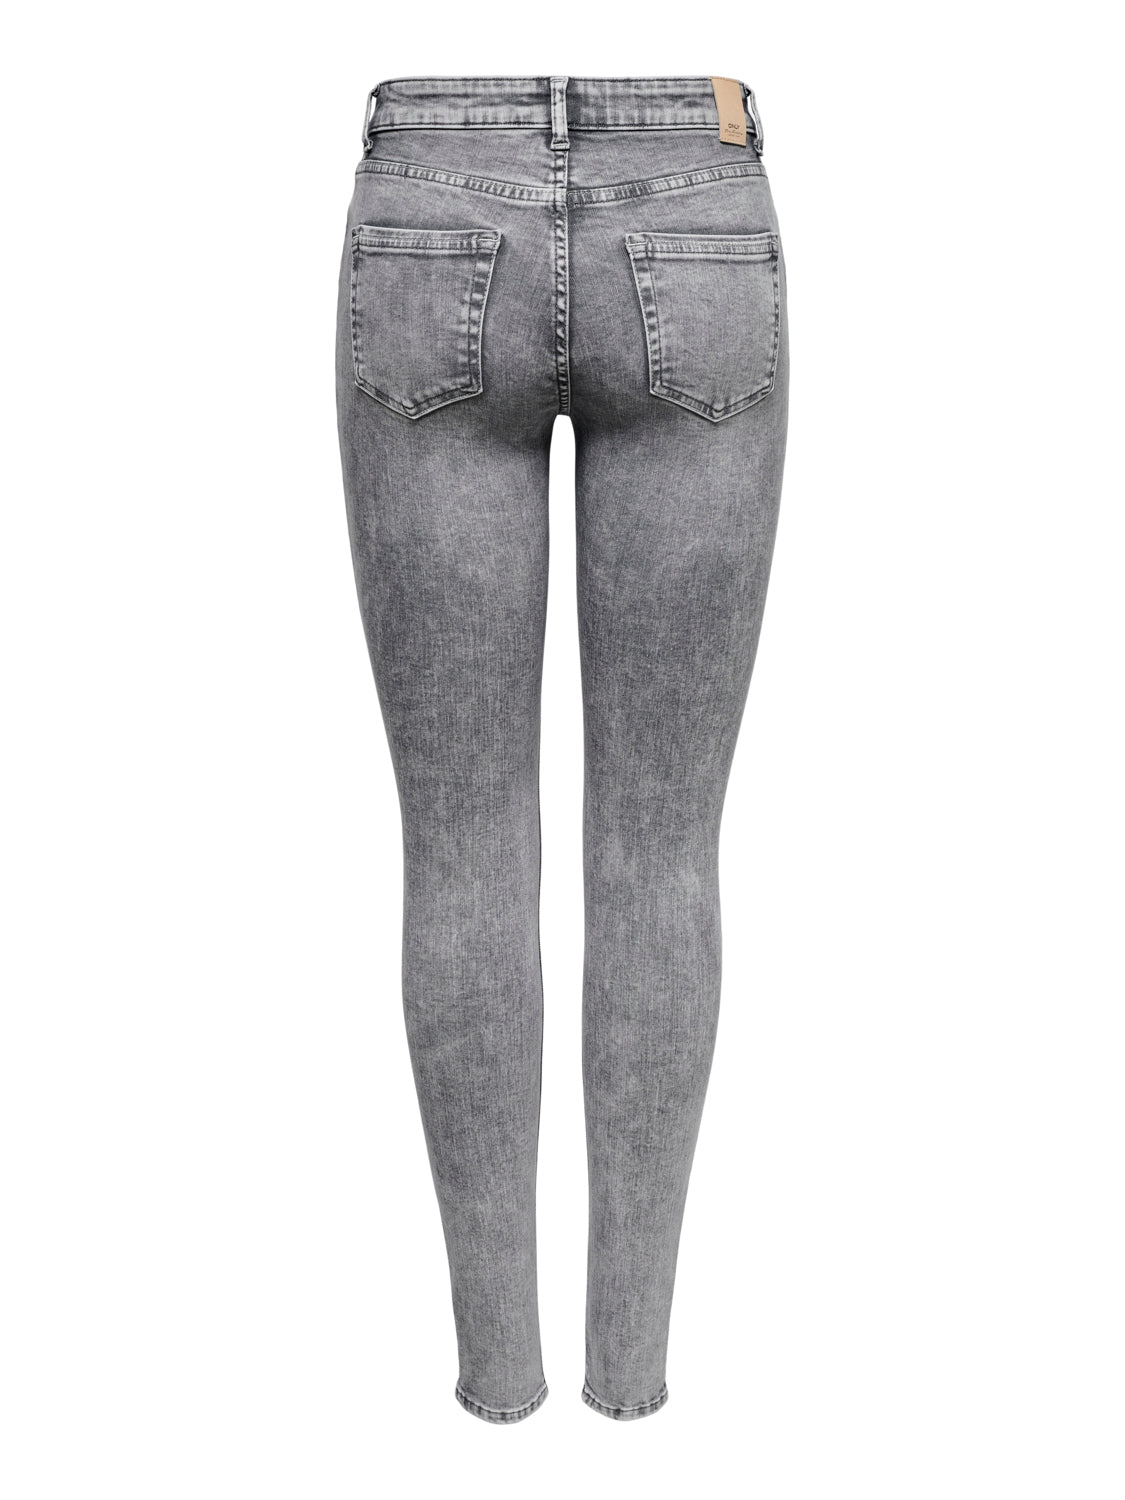 ONLBLUSH MW Skinny Jeans - TAI918